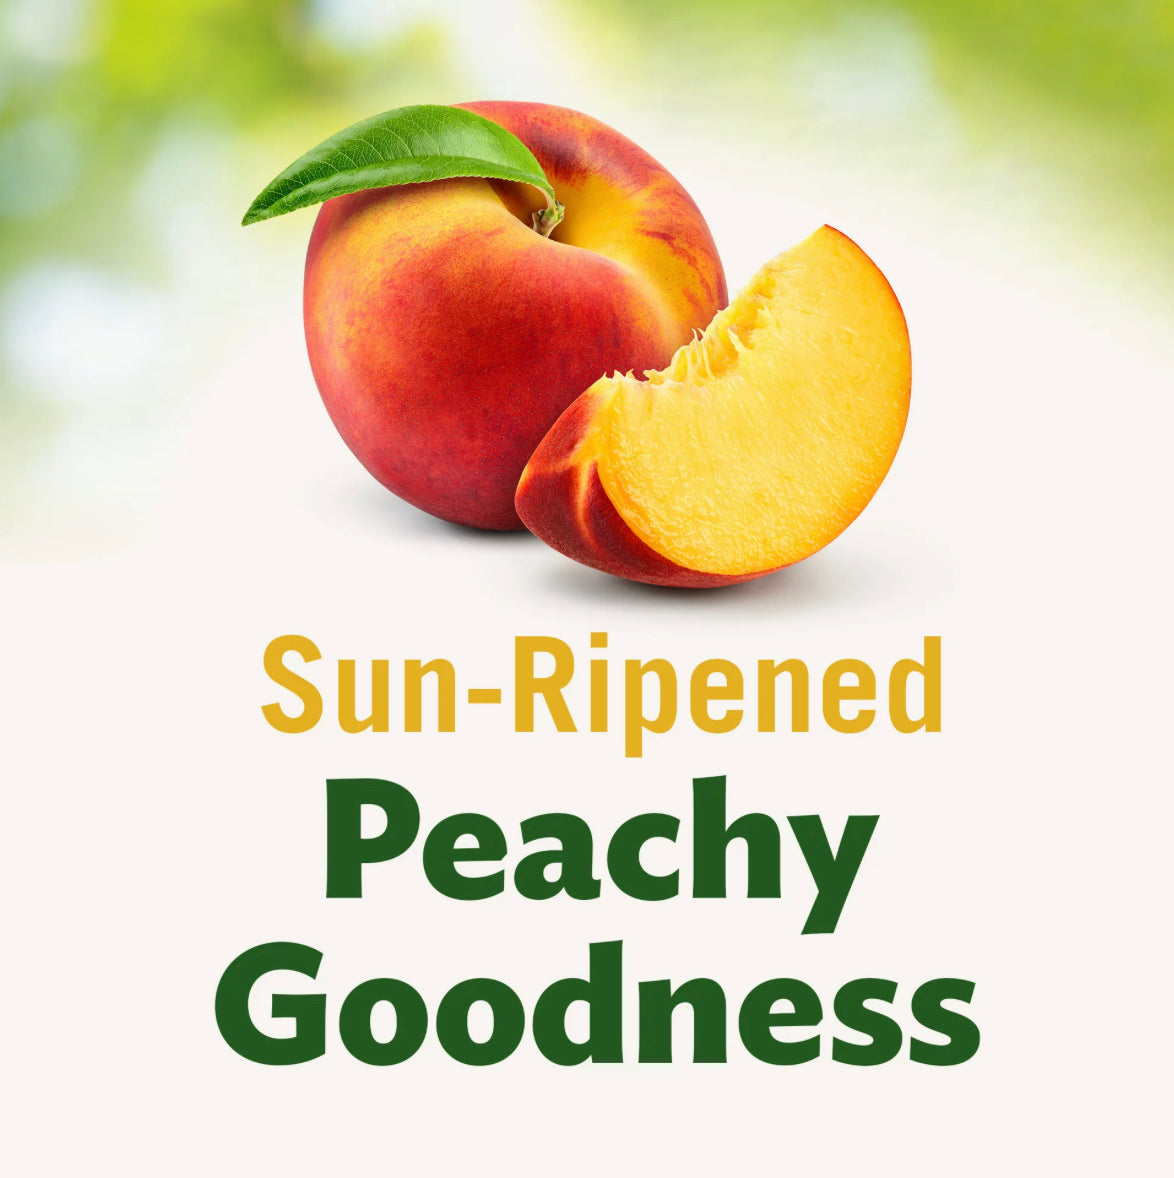 Del Monte Diced Peaches in 100% Juice 4.4oz